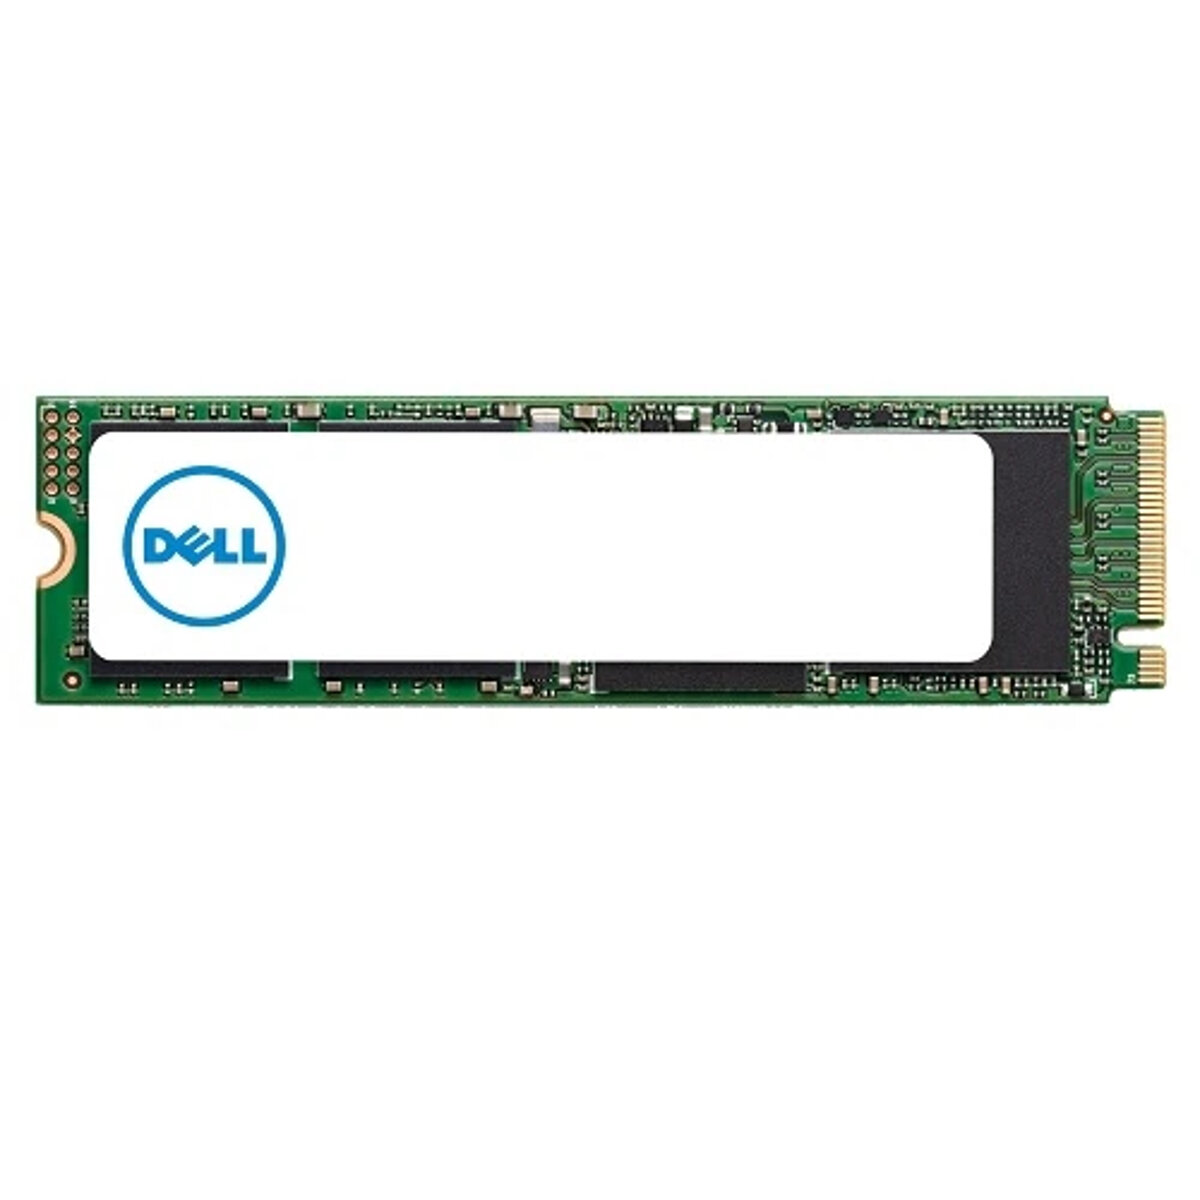 Dysku SSD Dell Technologies AB400209 2TB od frontu na białym tle